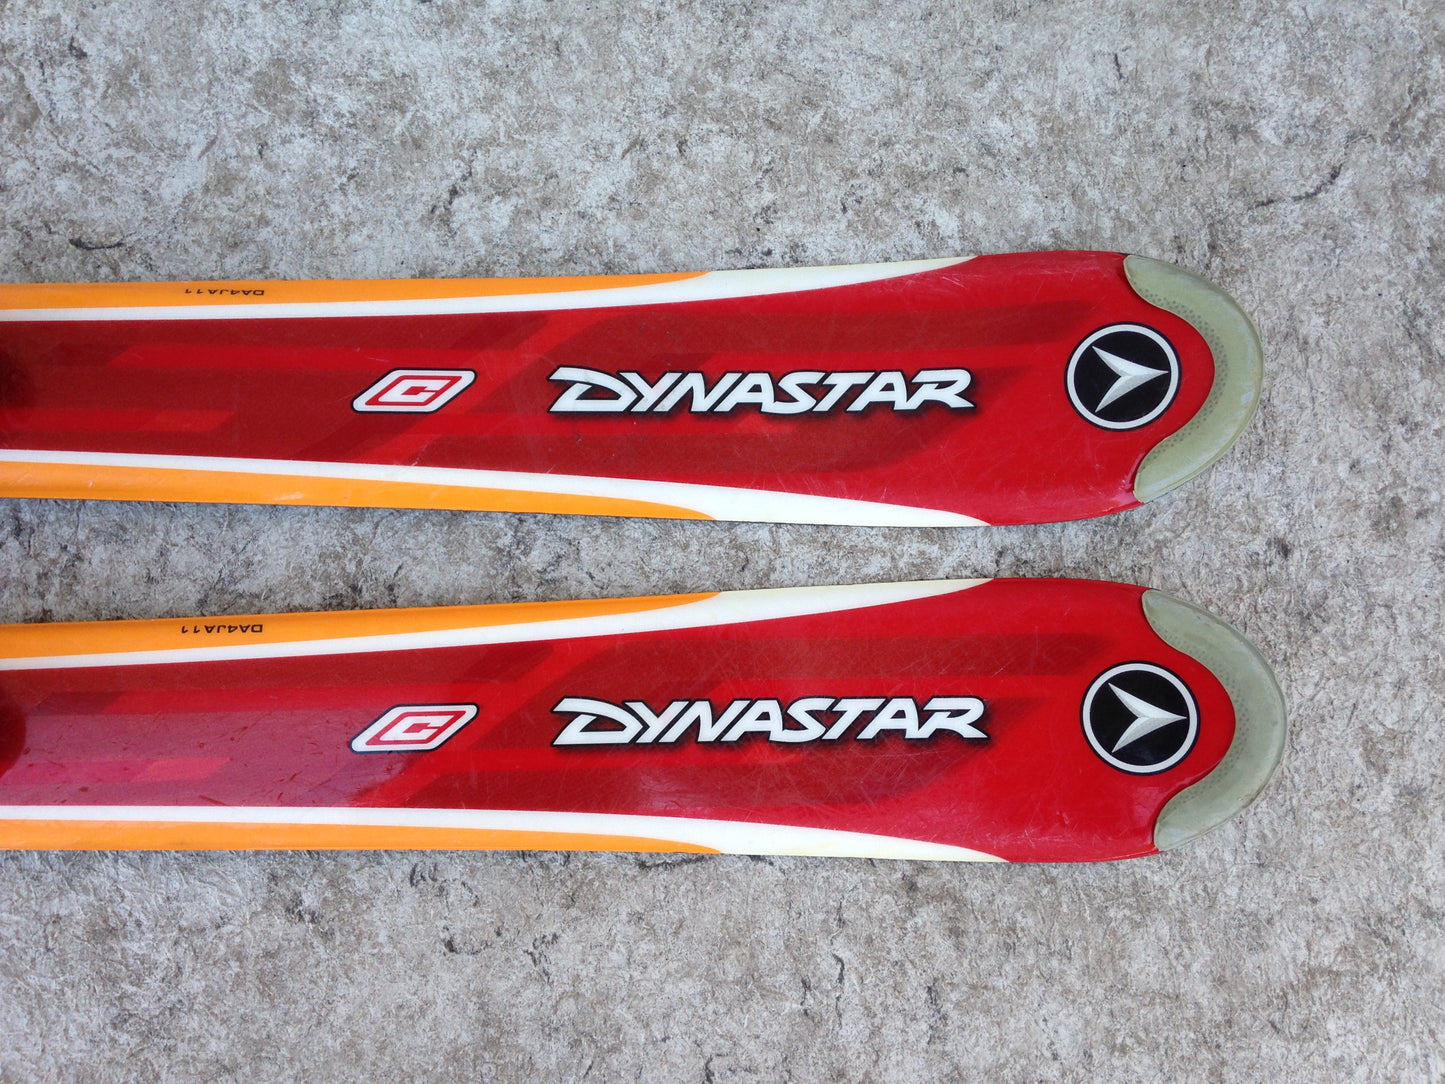 Ski 110 Dynastar Cross Team Parabolic Red Orange With Bindings Excellent